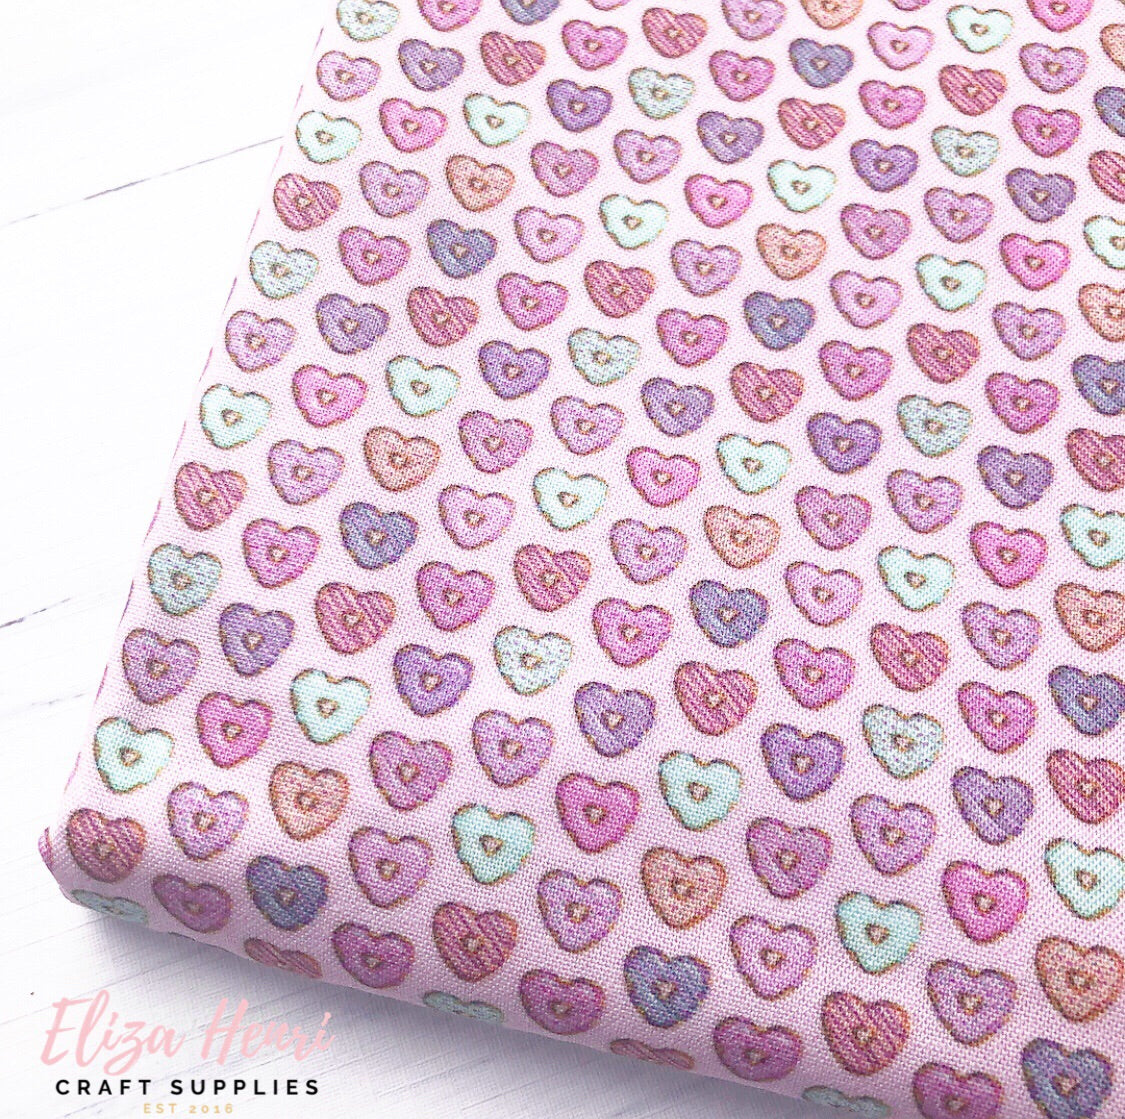 Heart Shaped Donuts Artisan Fabric Felt